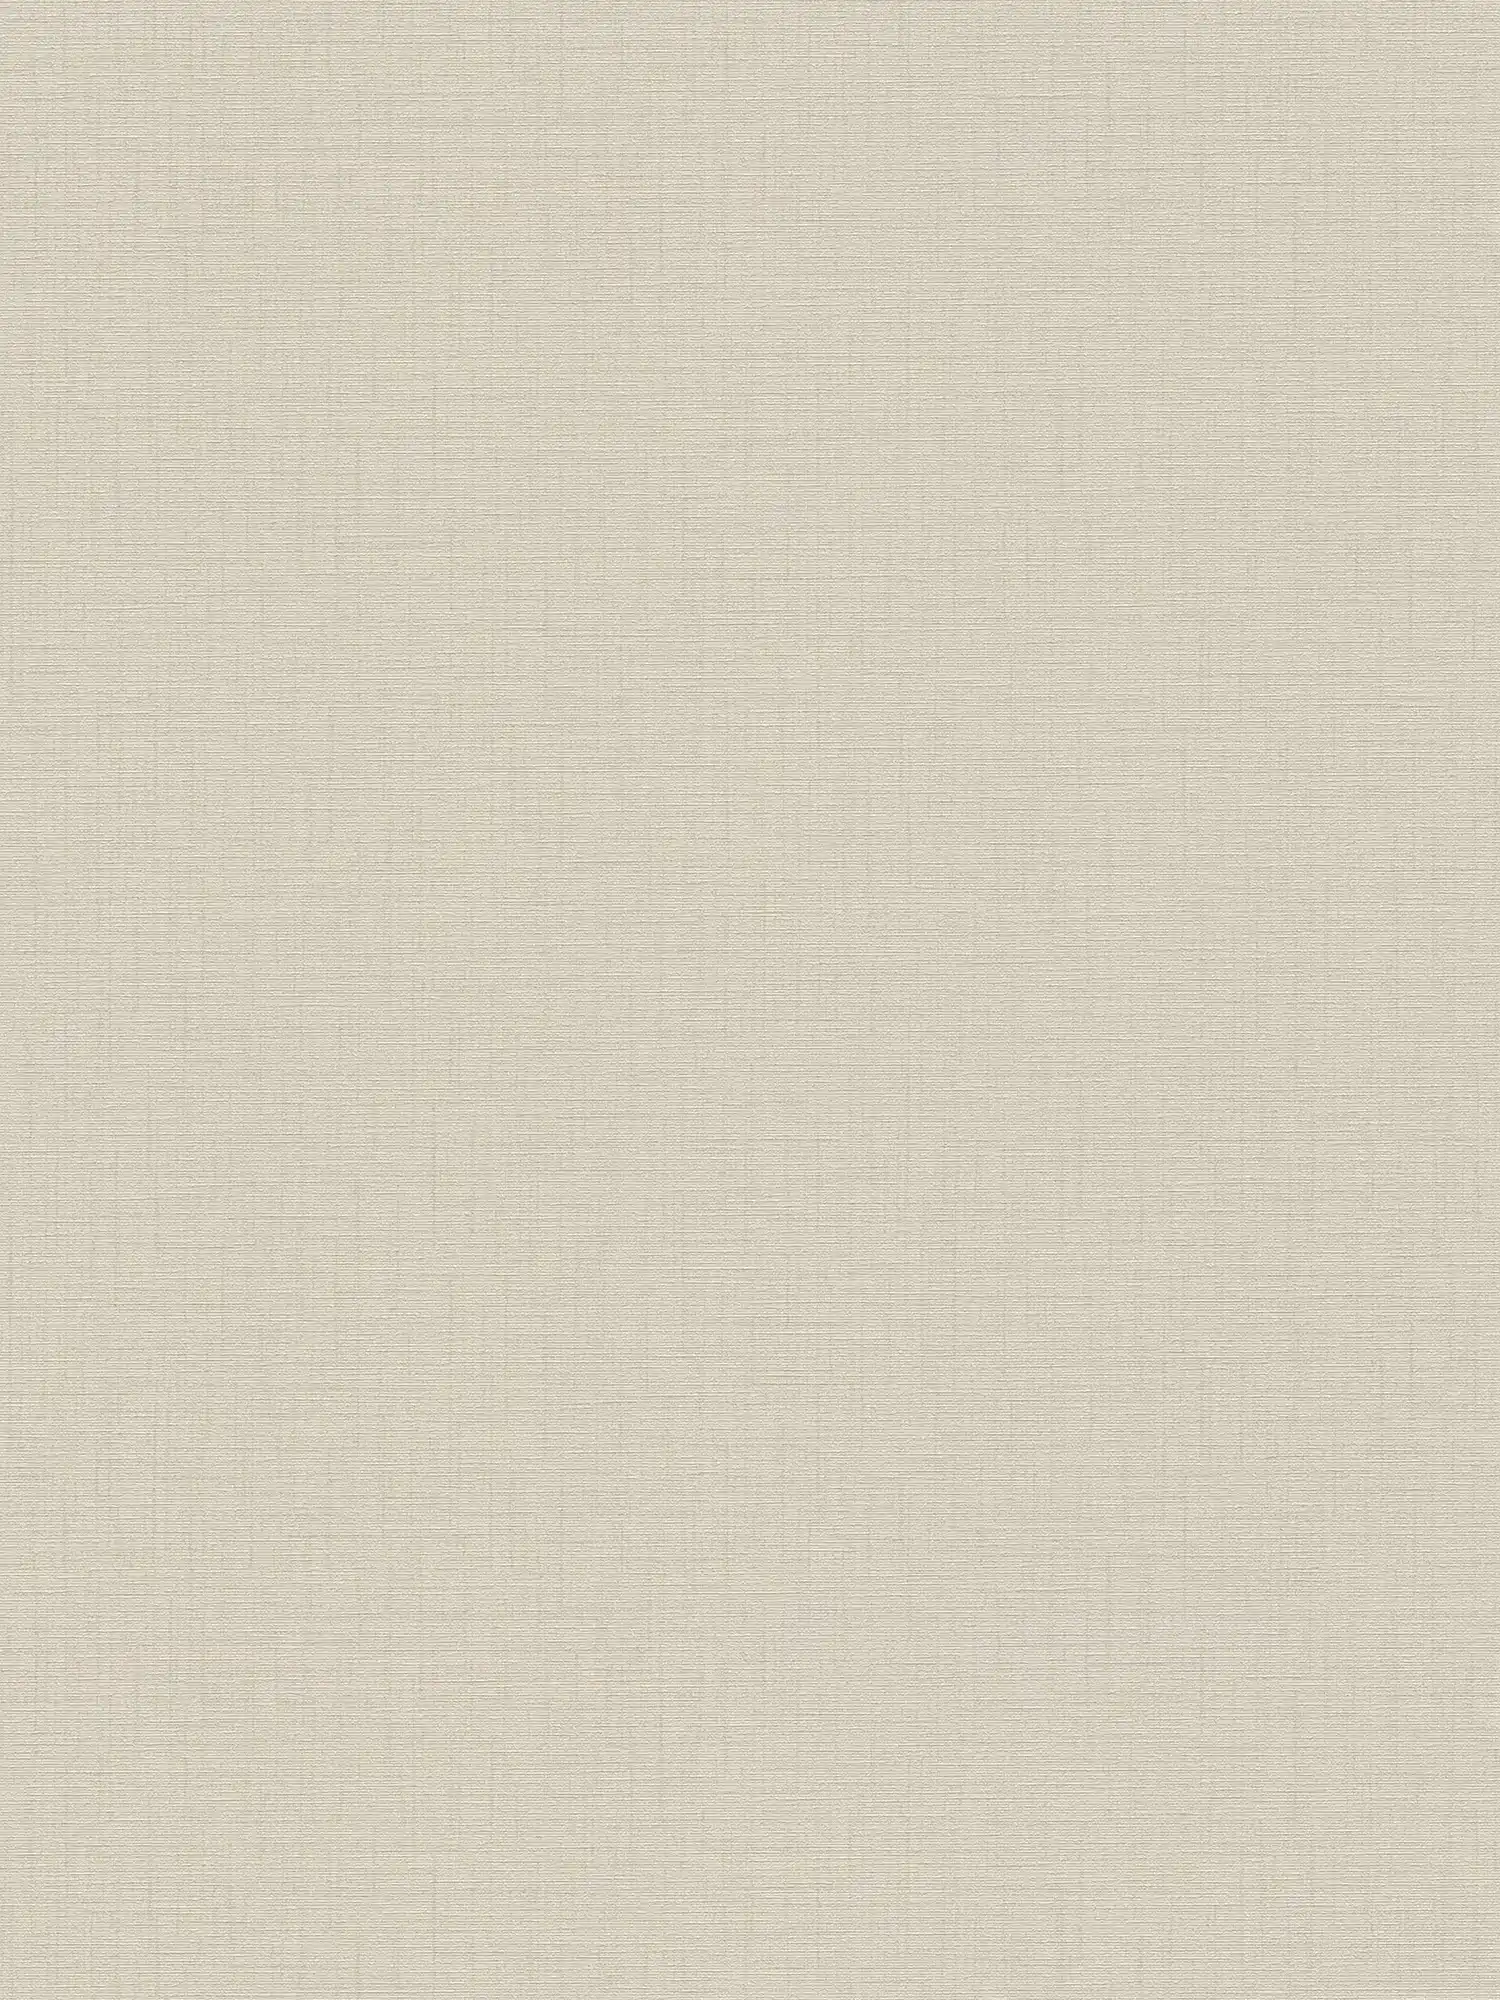 wallpaper plain beige with textile texture - grey
